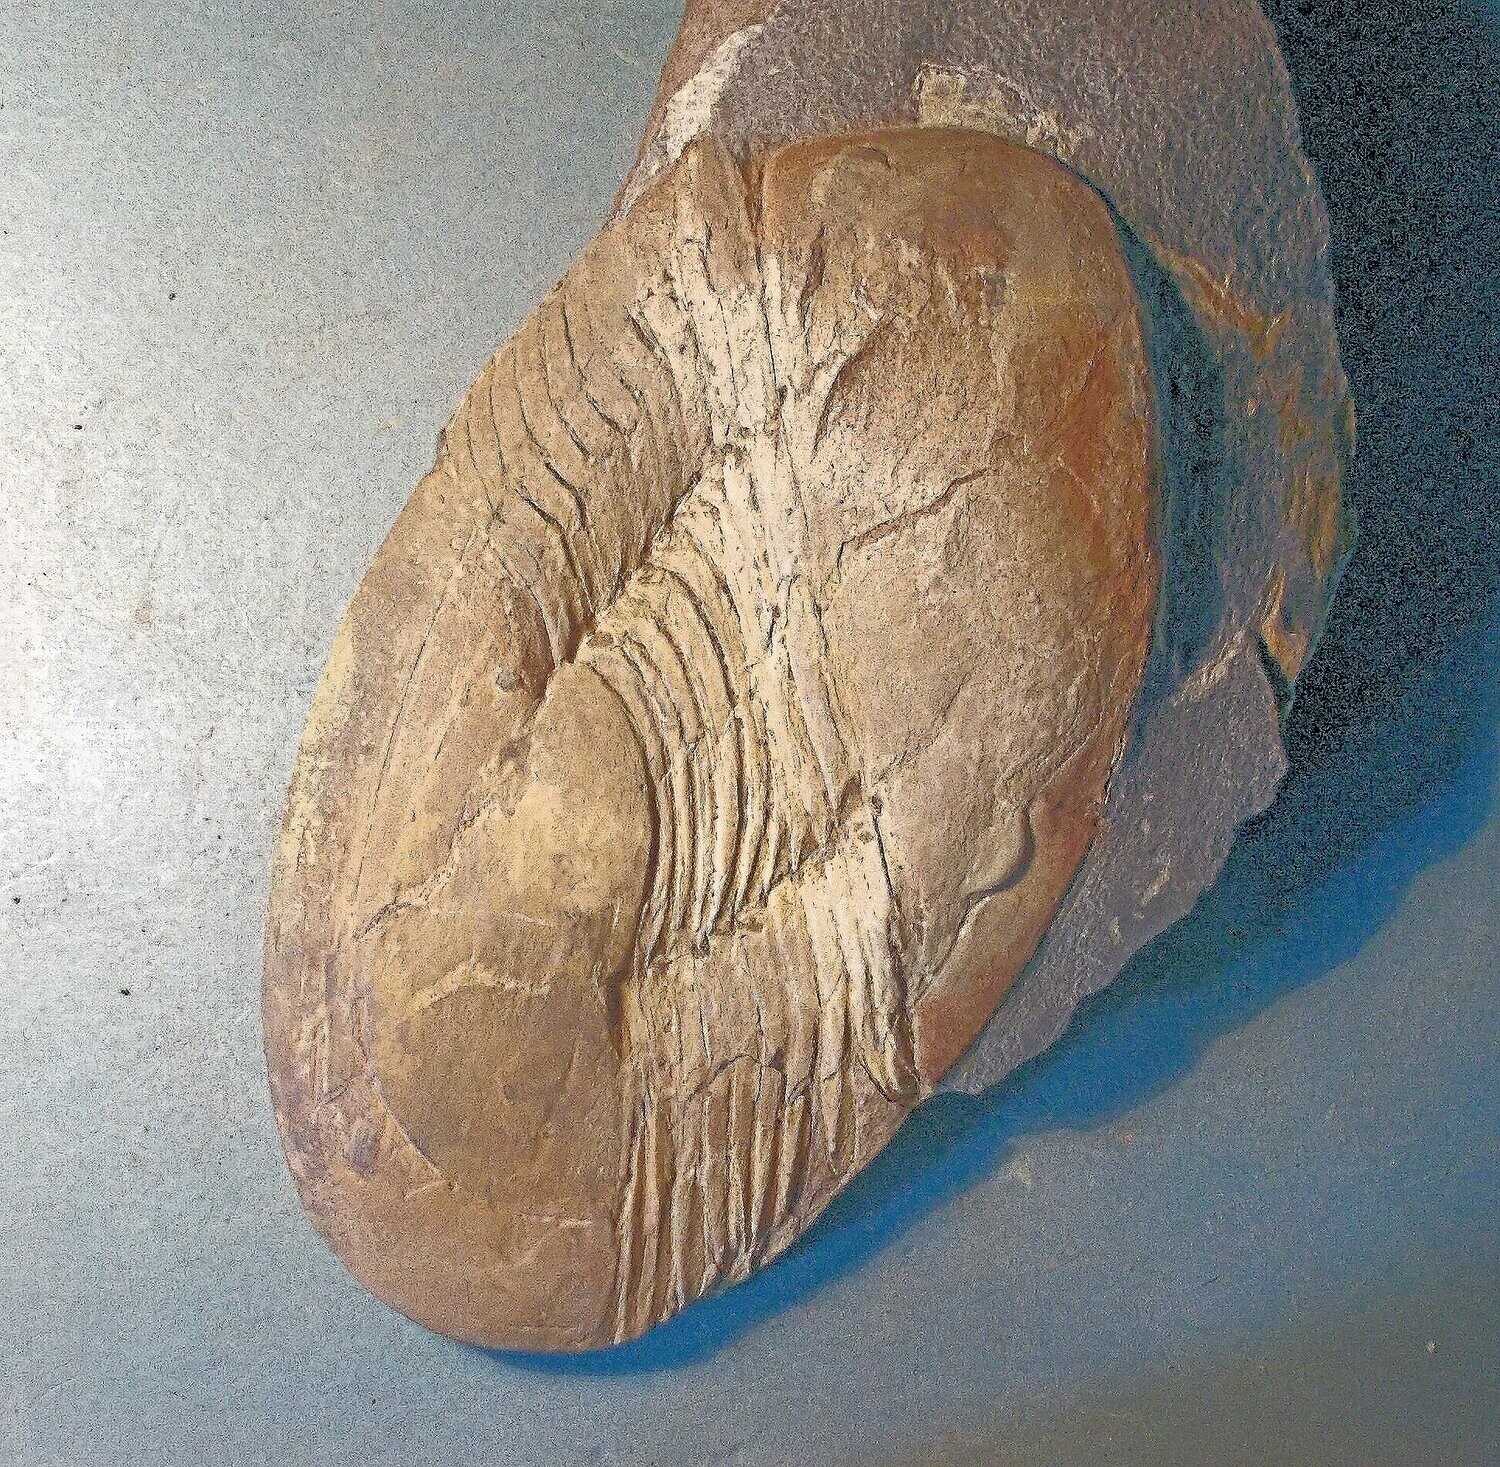 Fine 13.5cm complete  prone Ectillaenus giganteus with both eyes and both librigena; Ordovician, Llanvirn Series, Valongo Formation, Portugal.